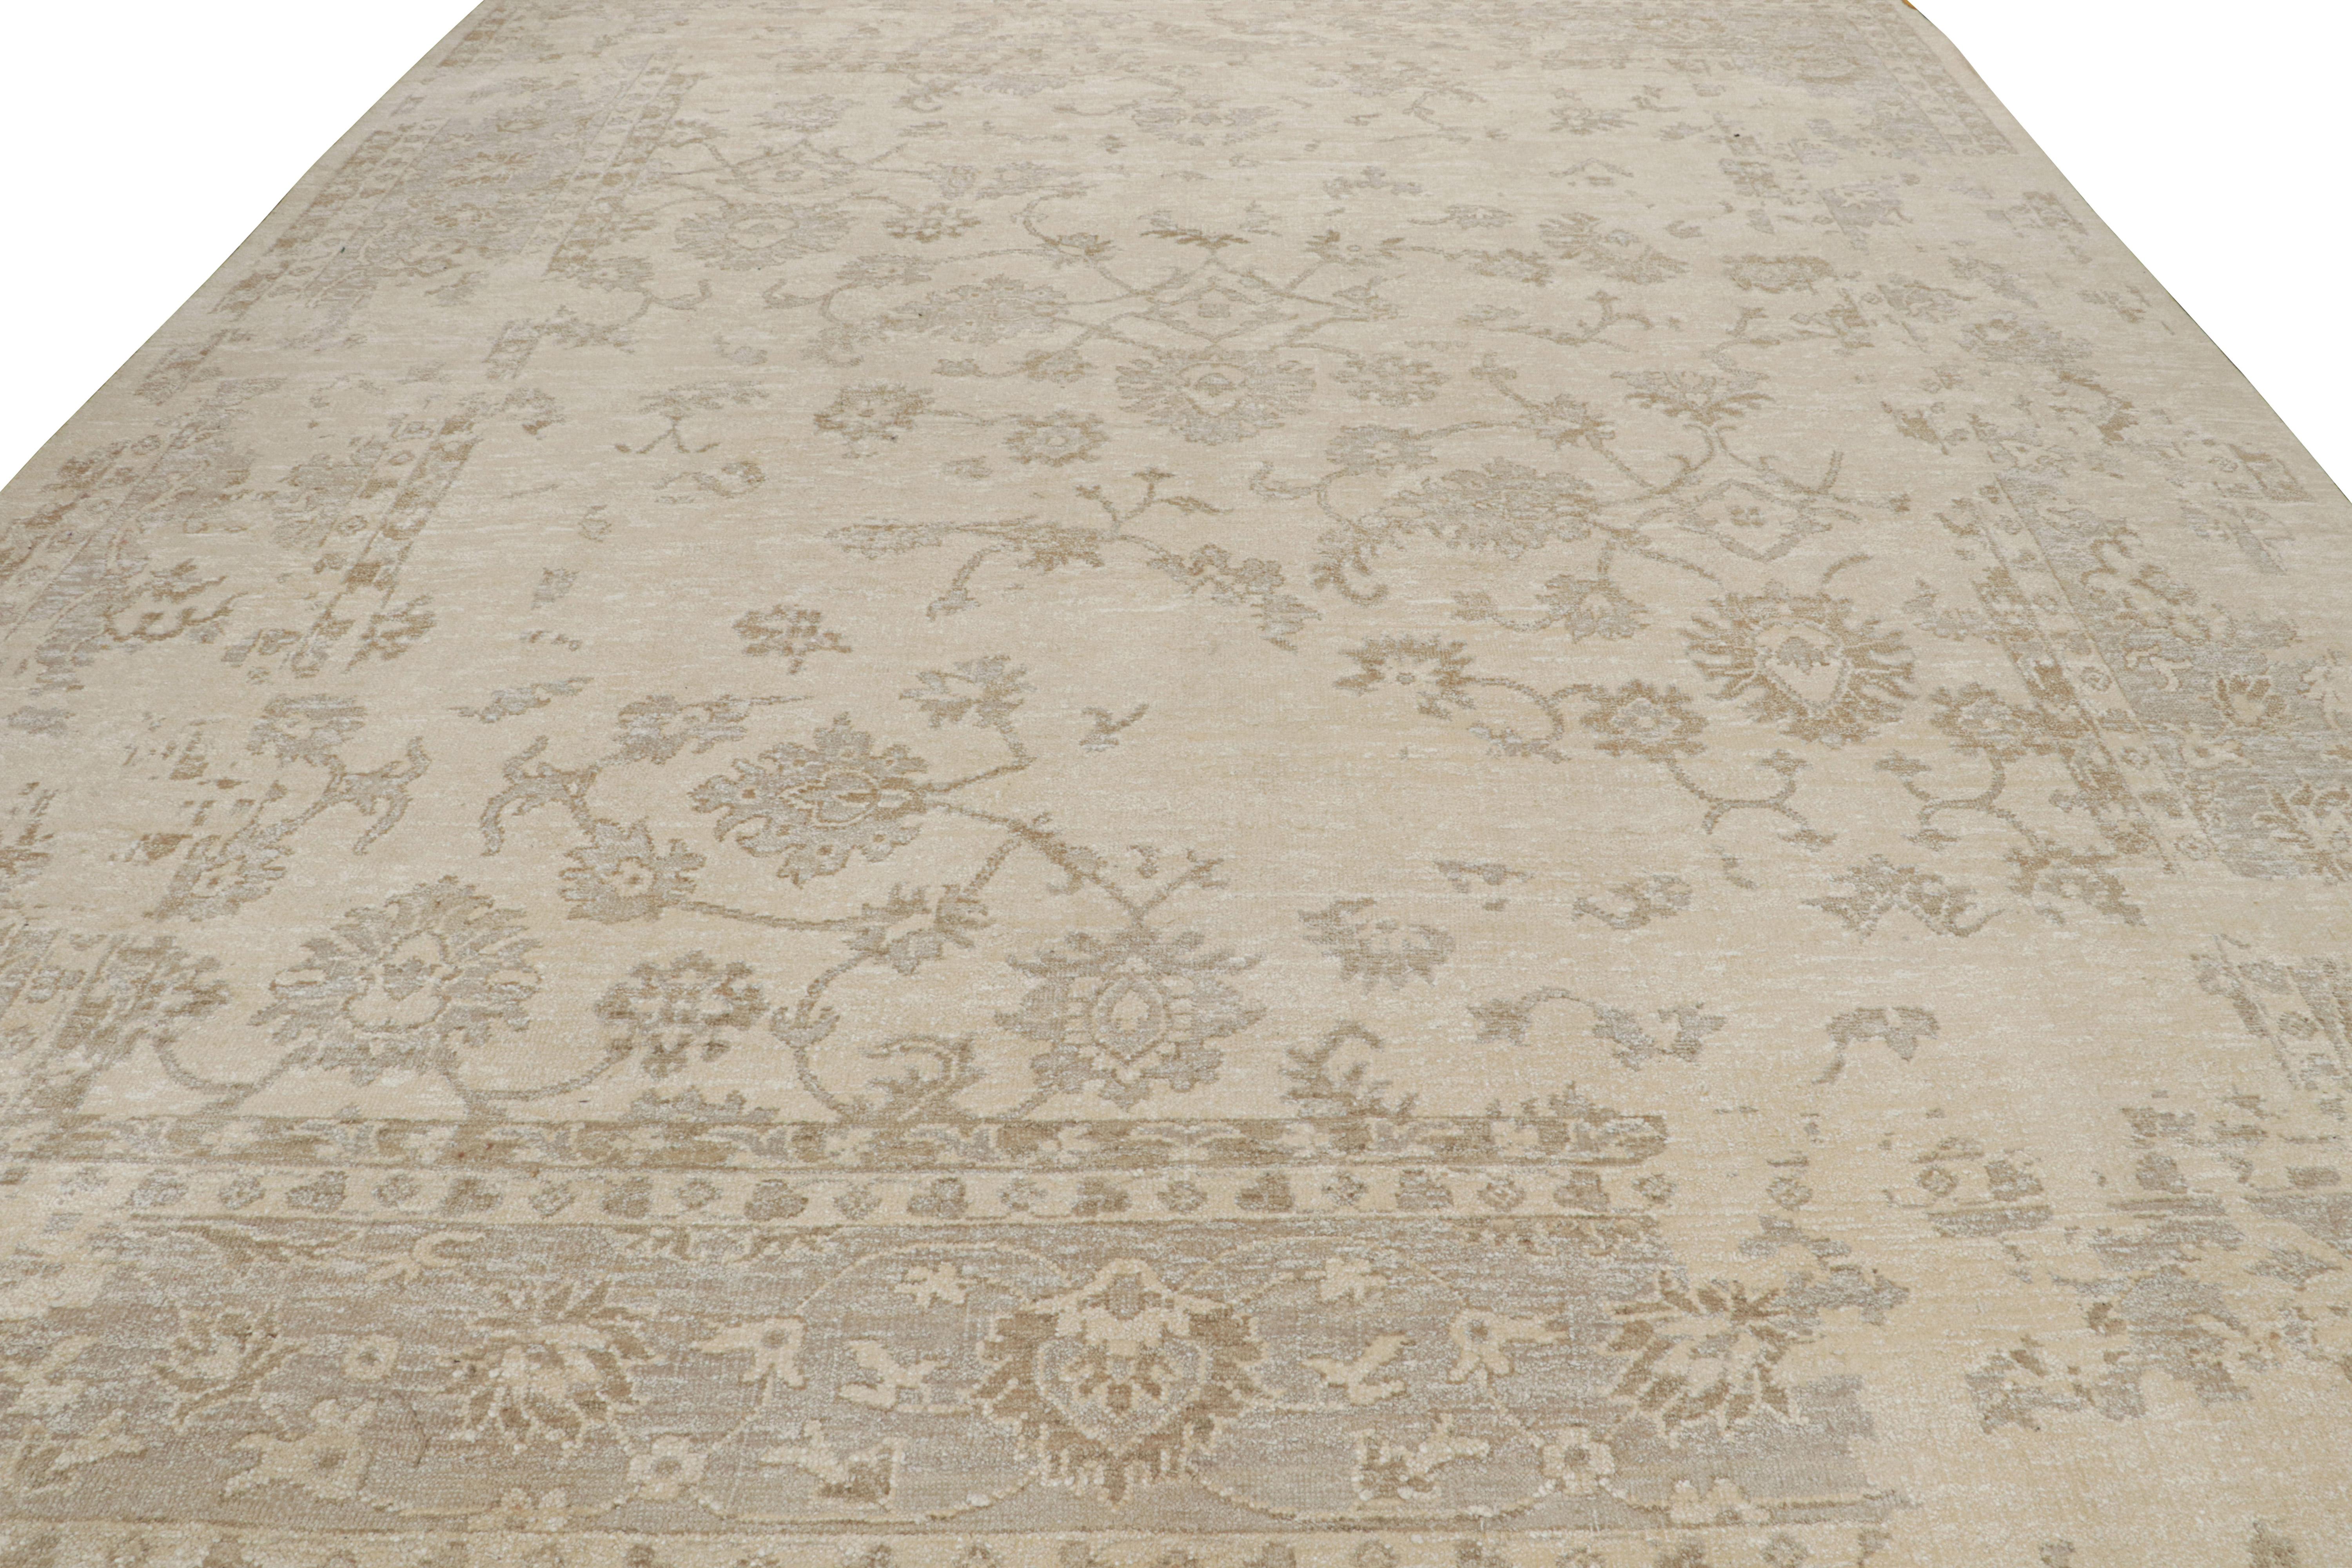 Indian Rug & Kilim’s Oushak style rug in Greige & Brown Floral Patterns For Sale